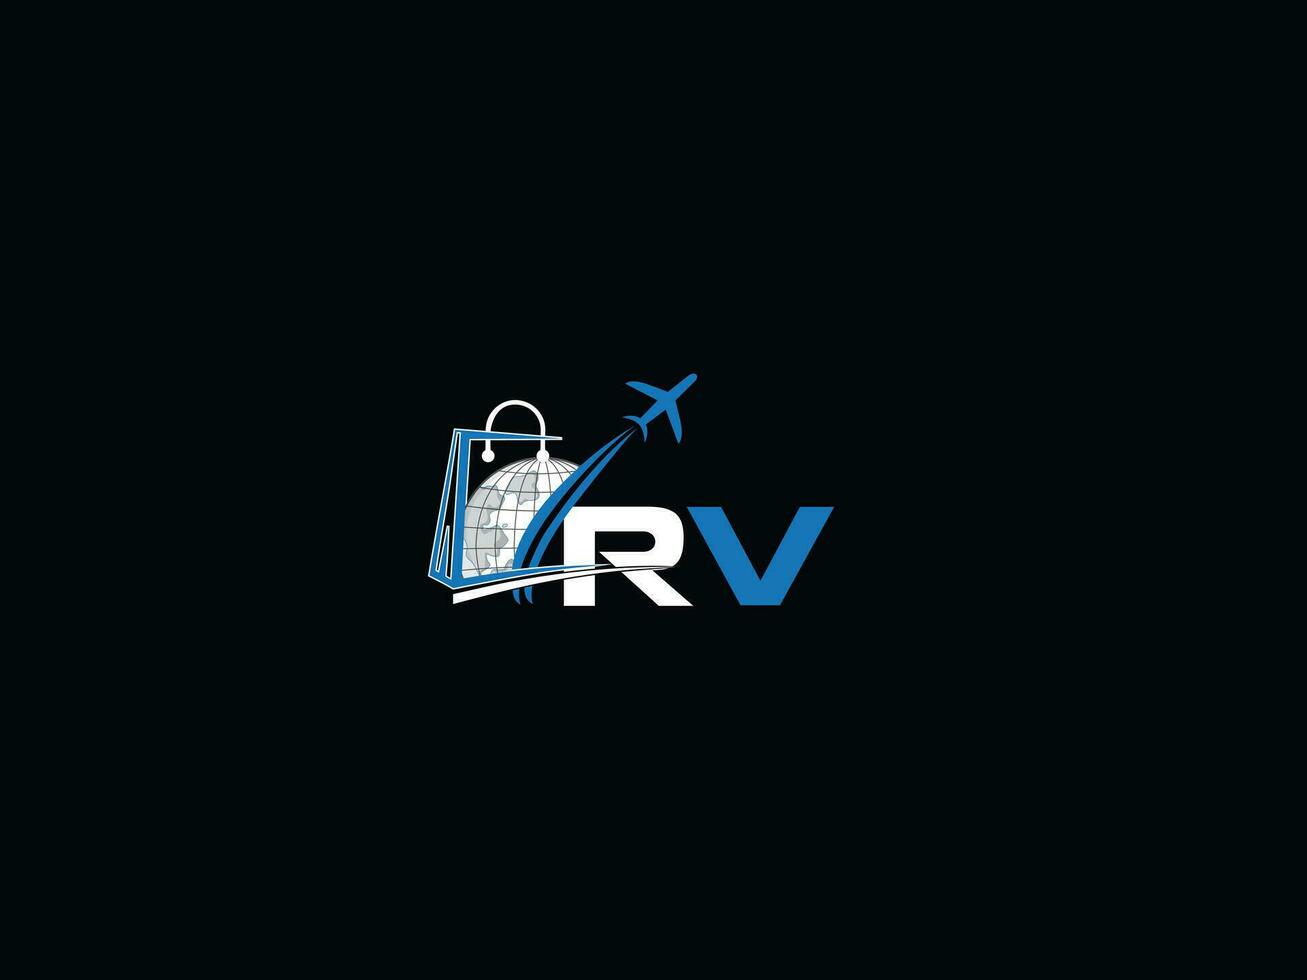 rv inicial viaje logo, creativo global rv de viaje logo letra vector